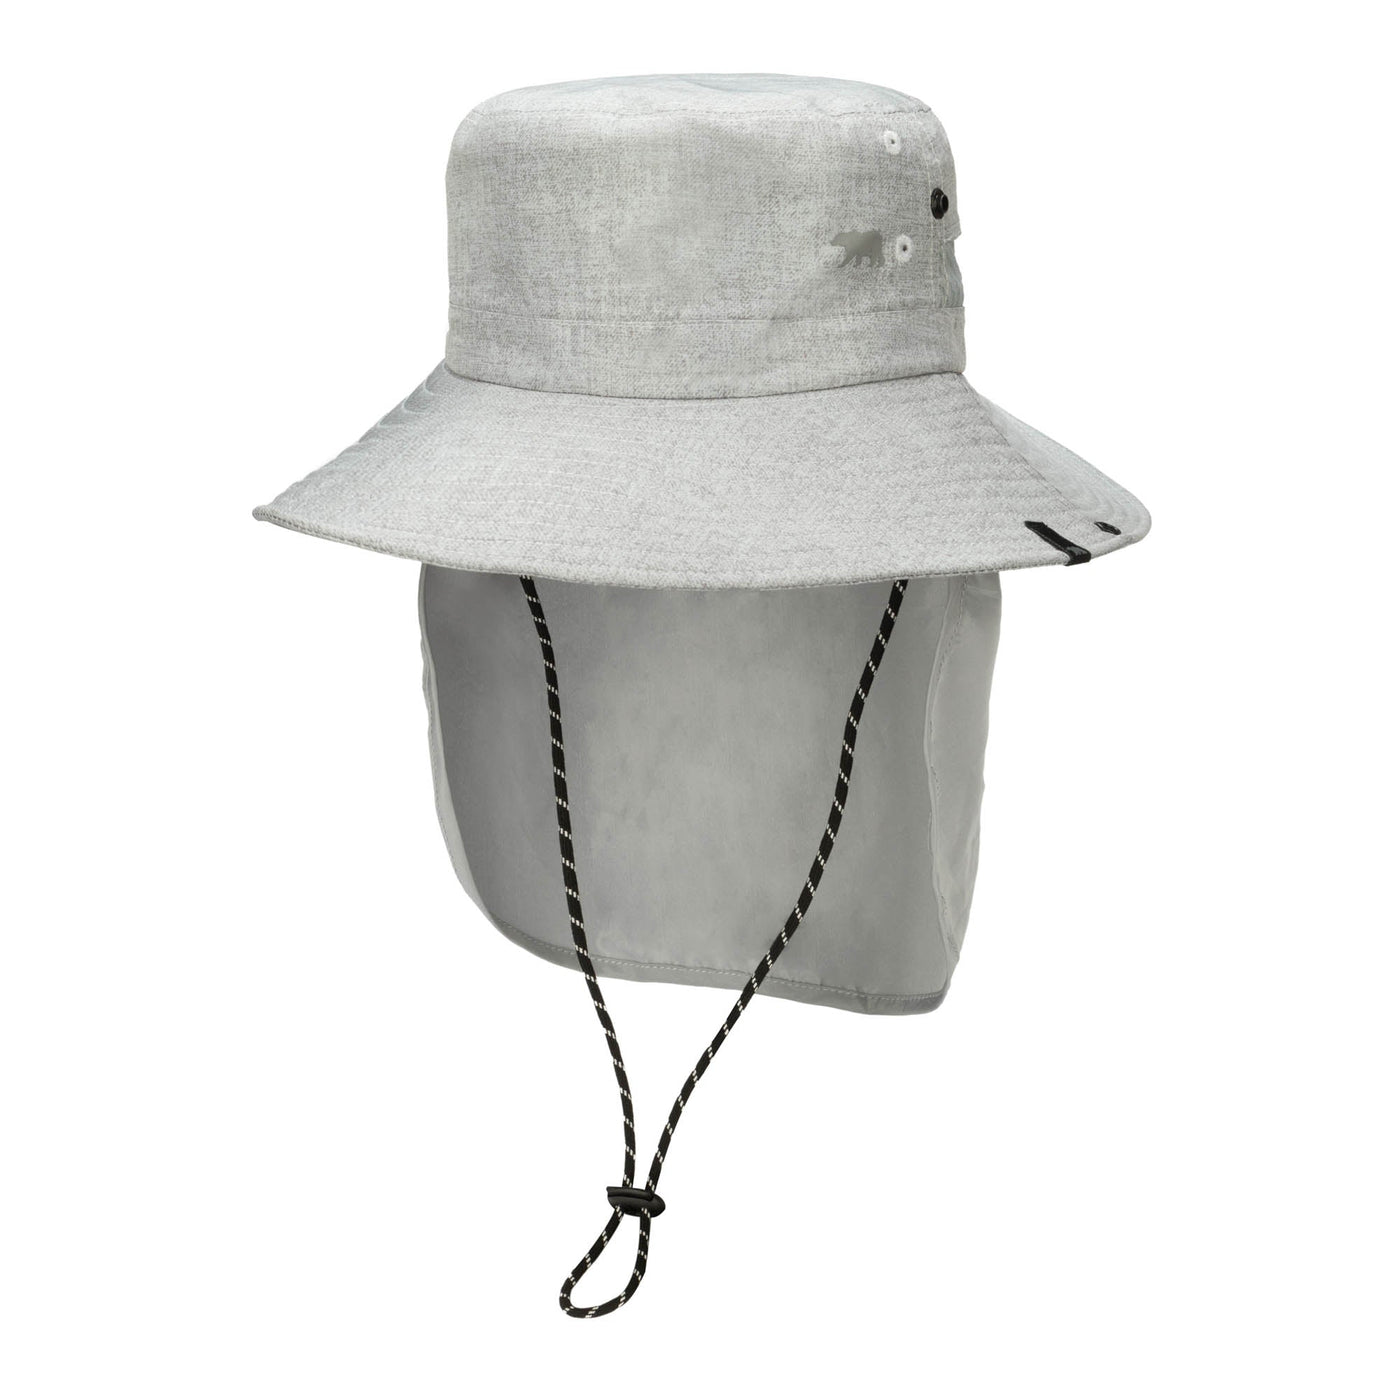 Adjustable Outdoor Boonie Hat for Men and Women